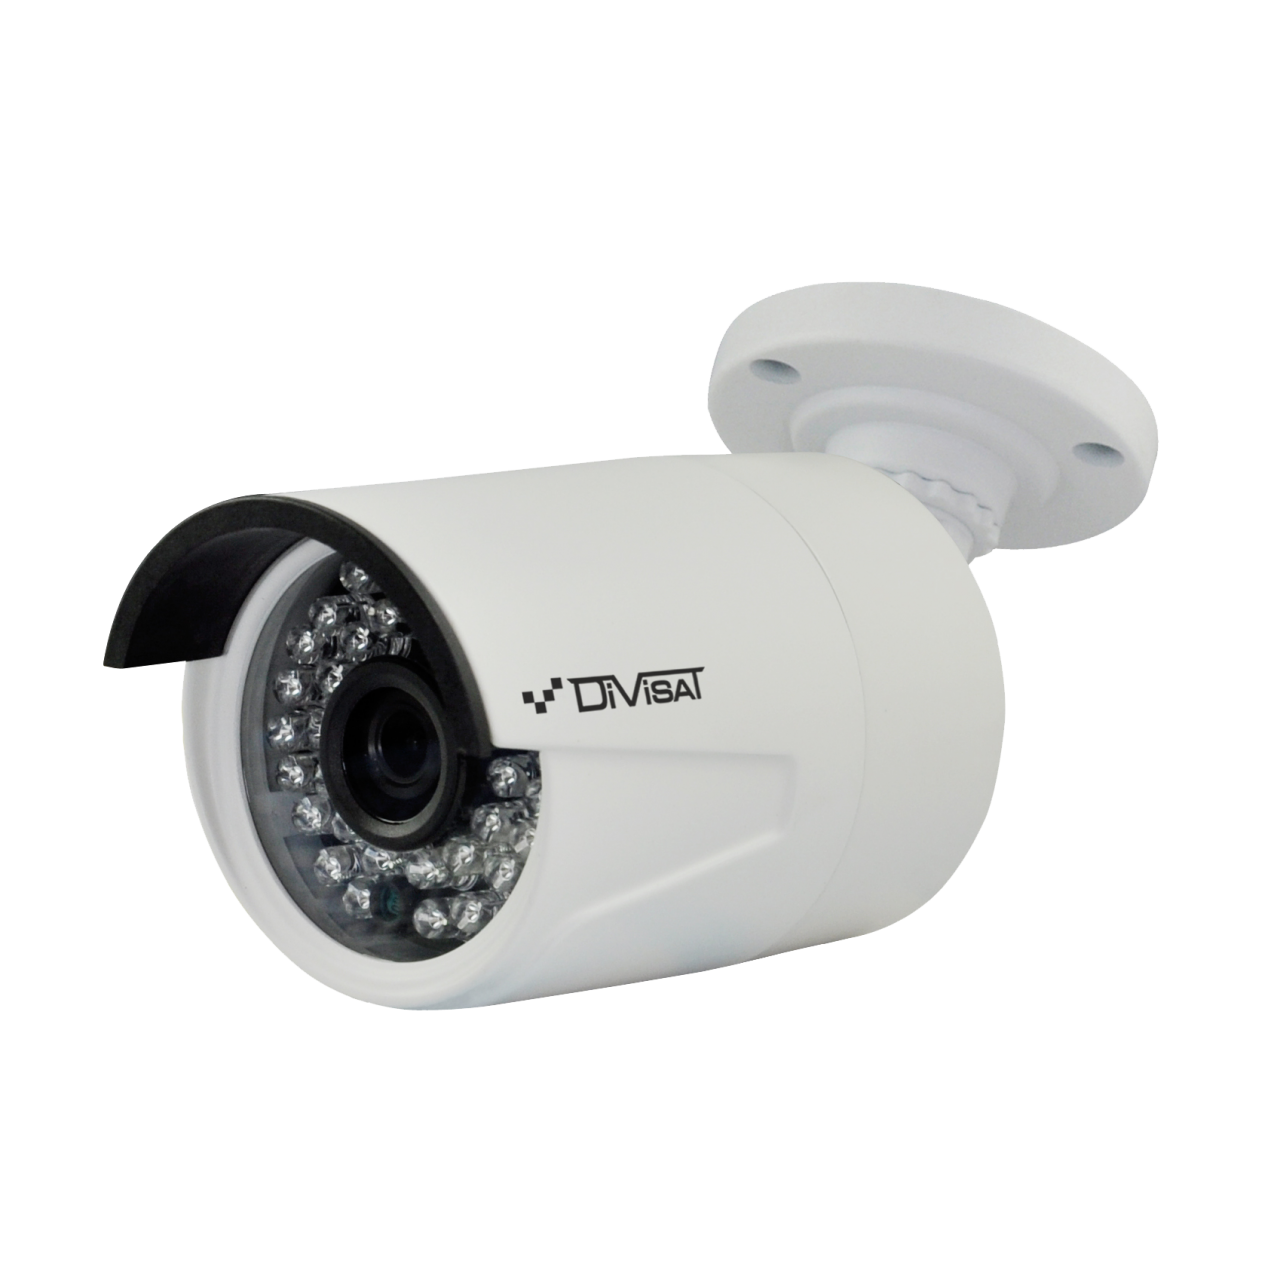 Уличная IP-видеокамера DVI-S125 LV